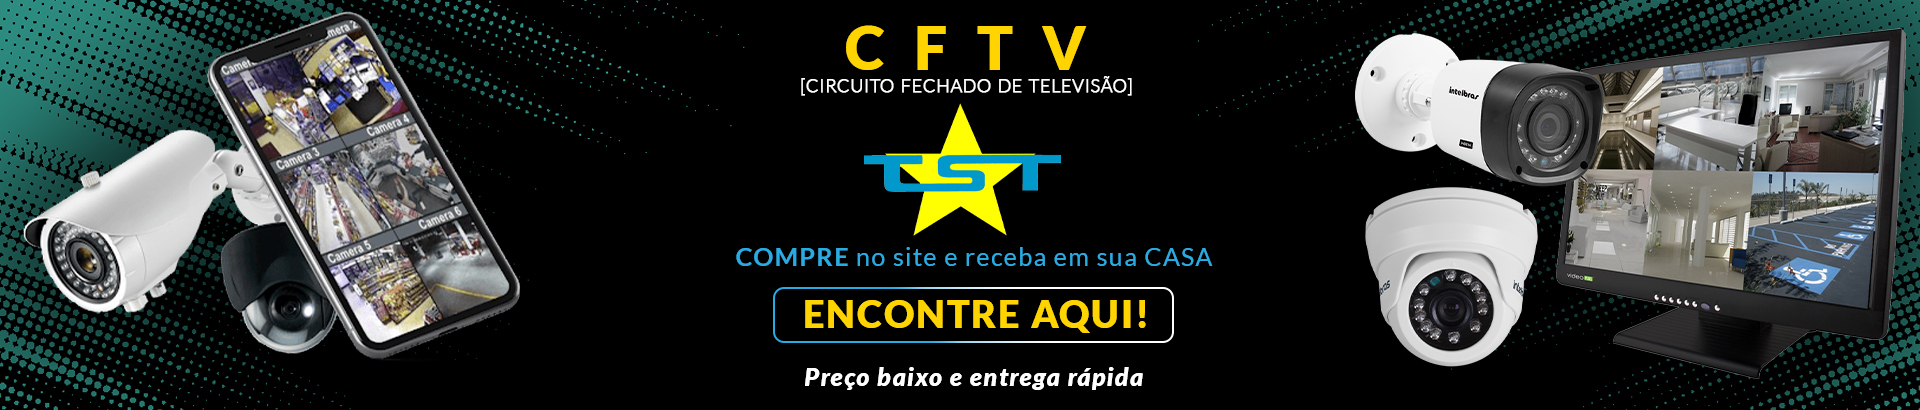 Banner-CFTV